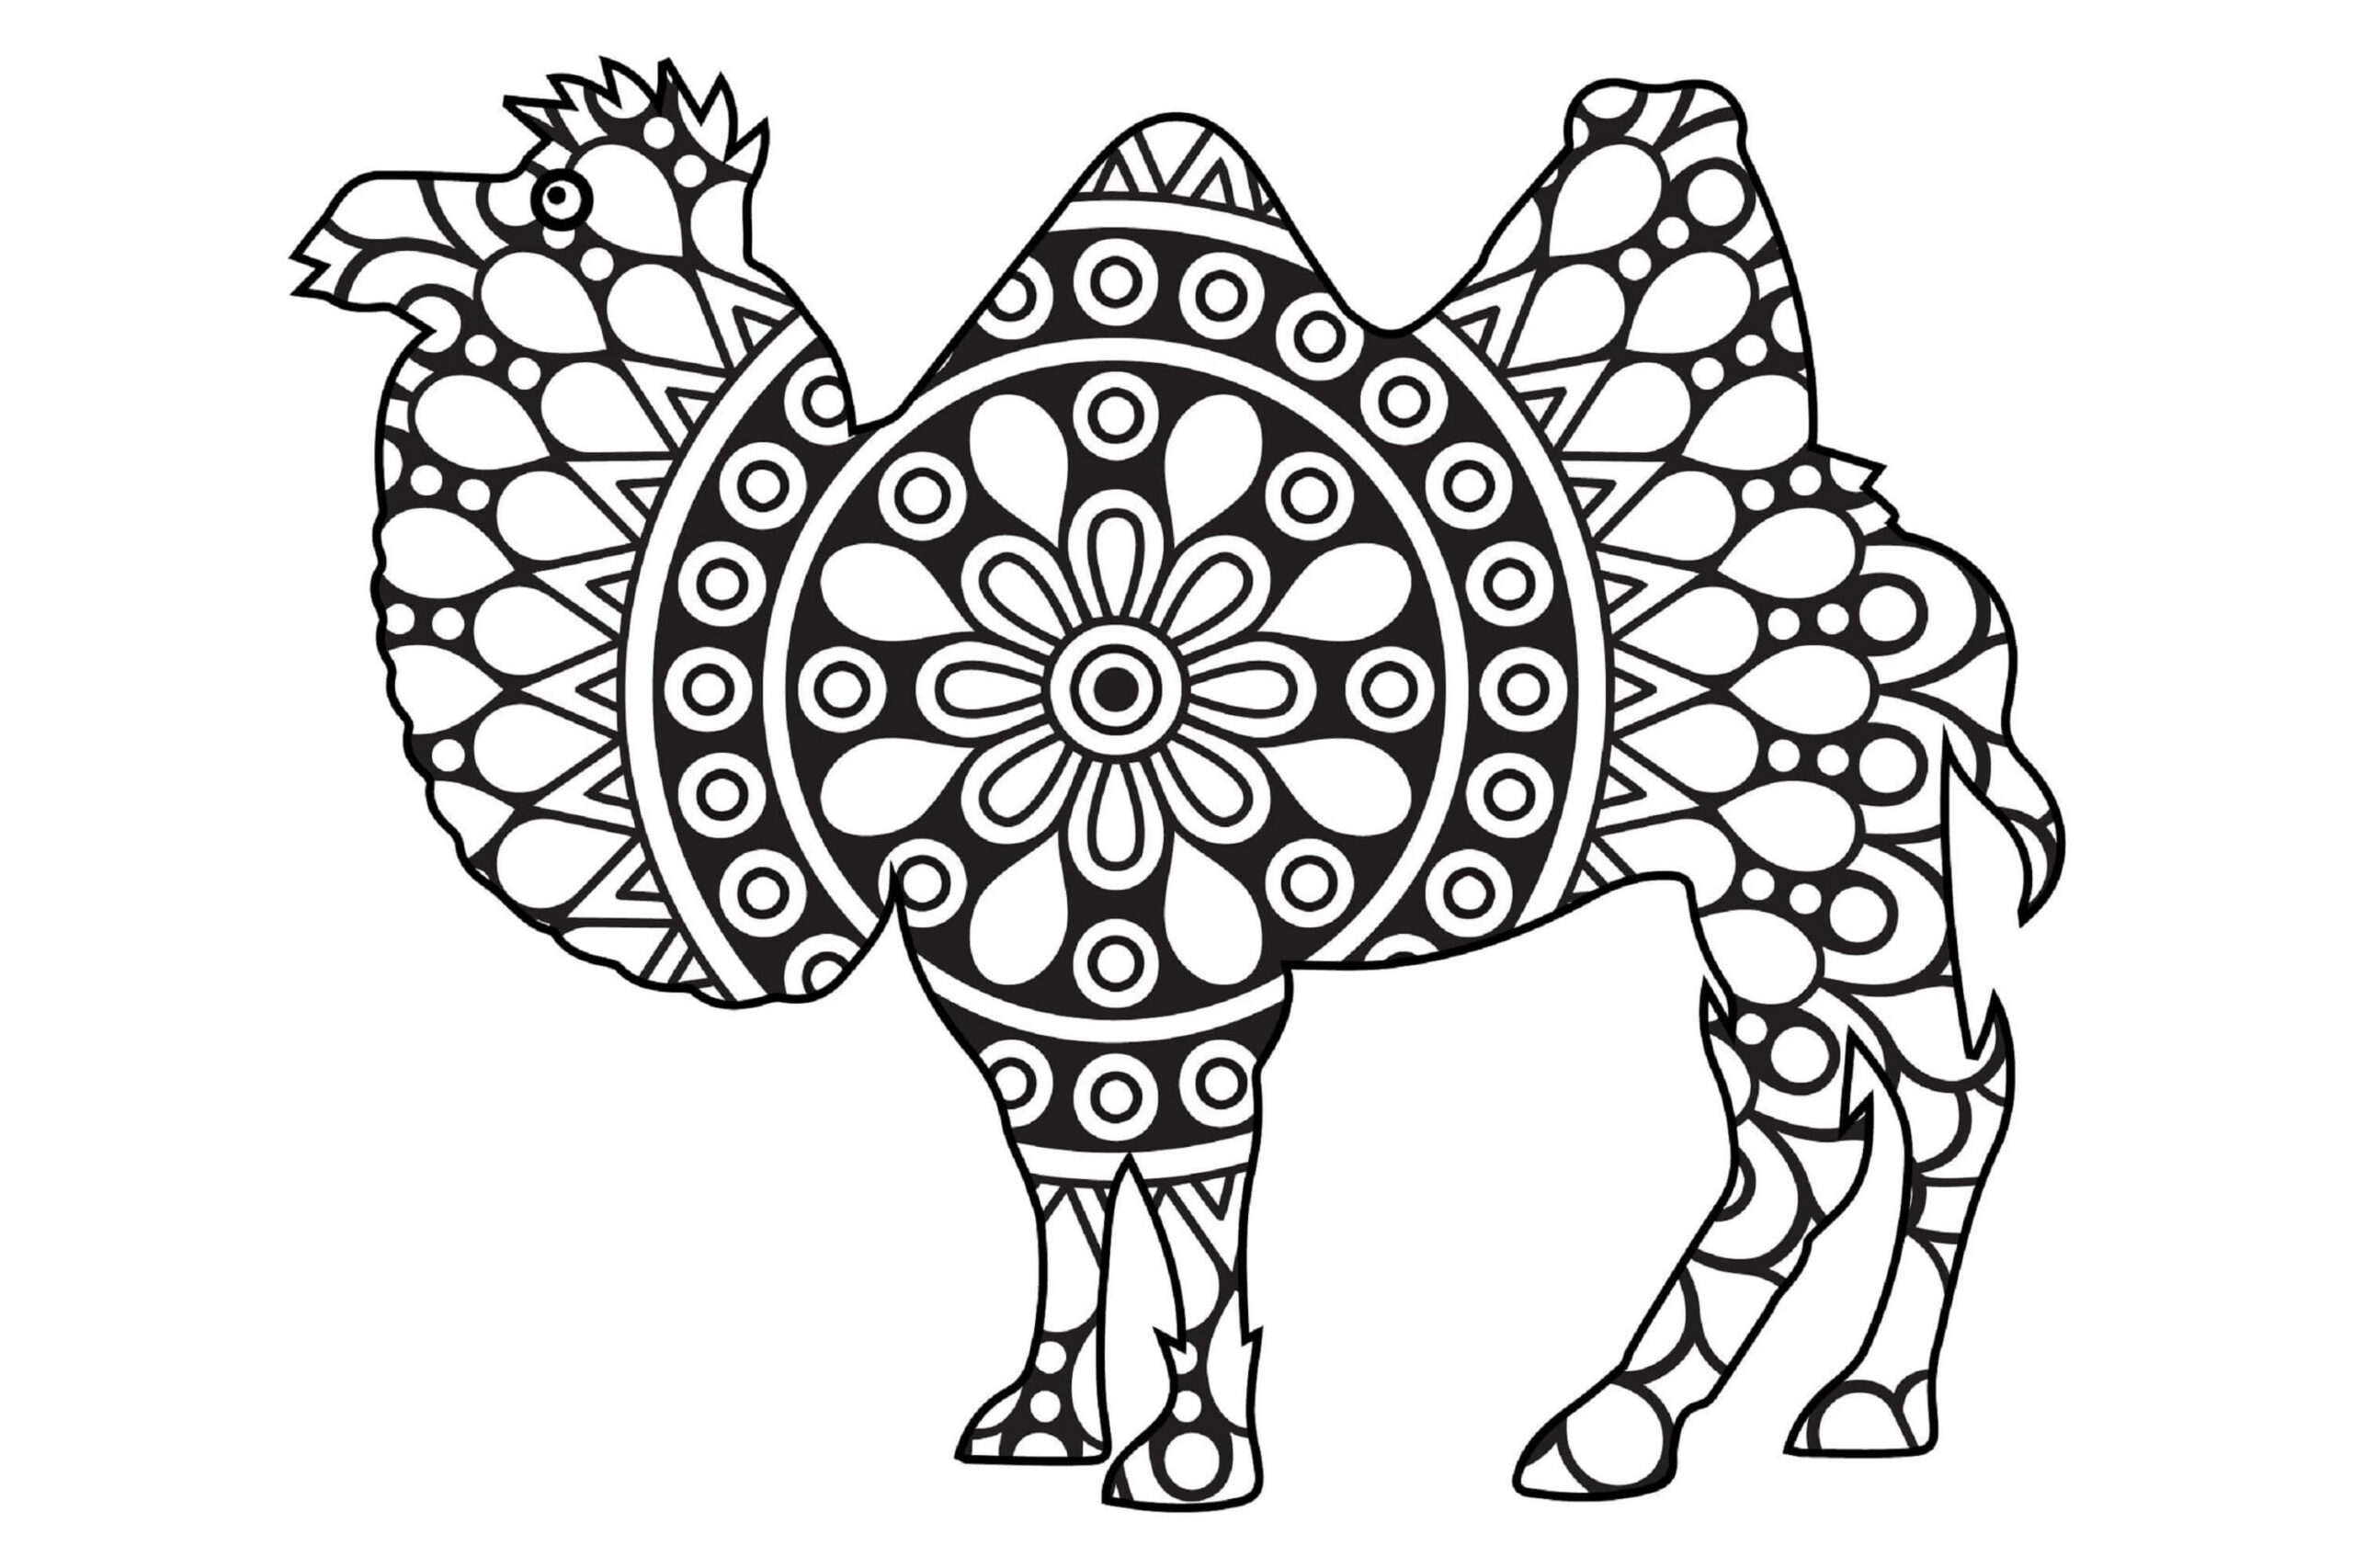 Mandala Camel Coloring Page - Sheet 1 Mandalas